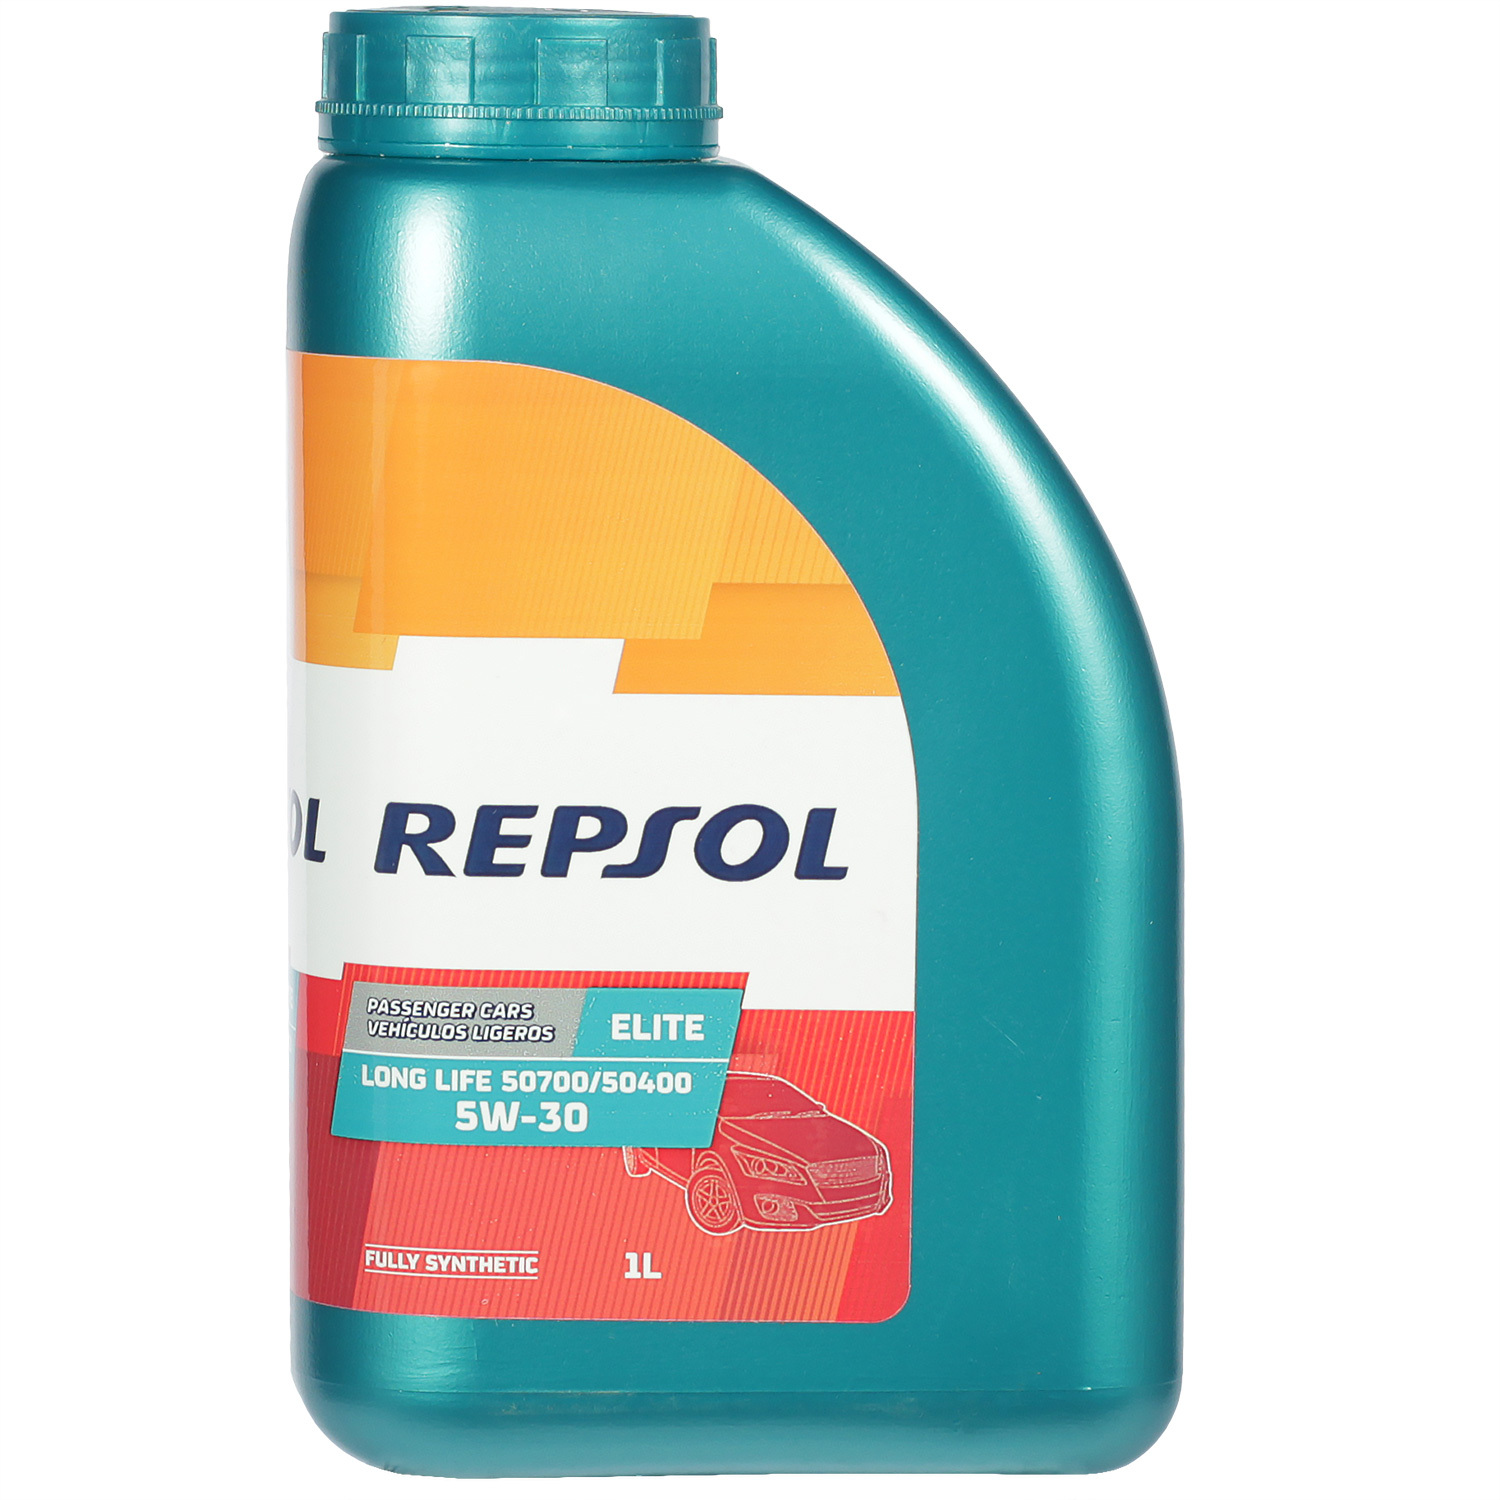 Repsol Моторное масло Repsol Elite LONG LIFE 50700/50400 5W-30, 1 л repsol моторное масло repsol elite competicion 5w 40 1 л